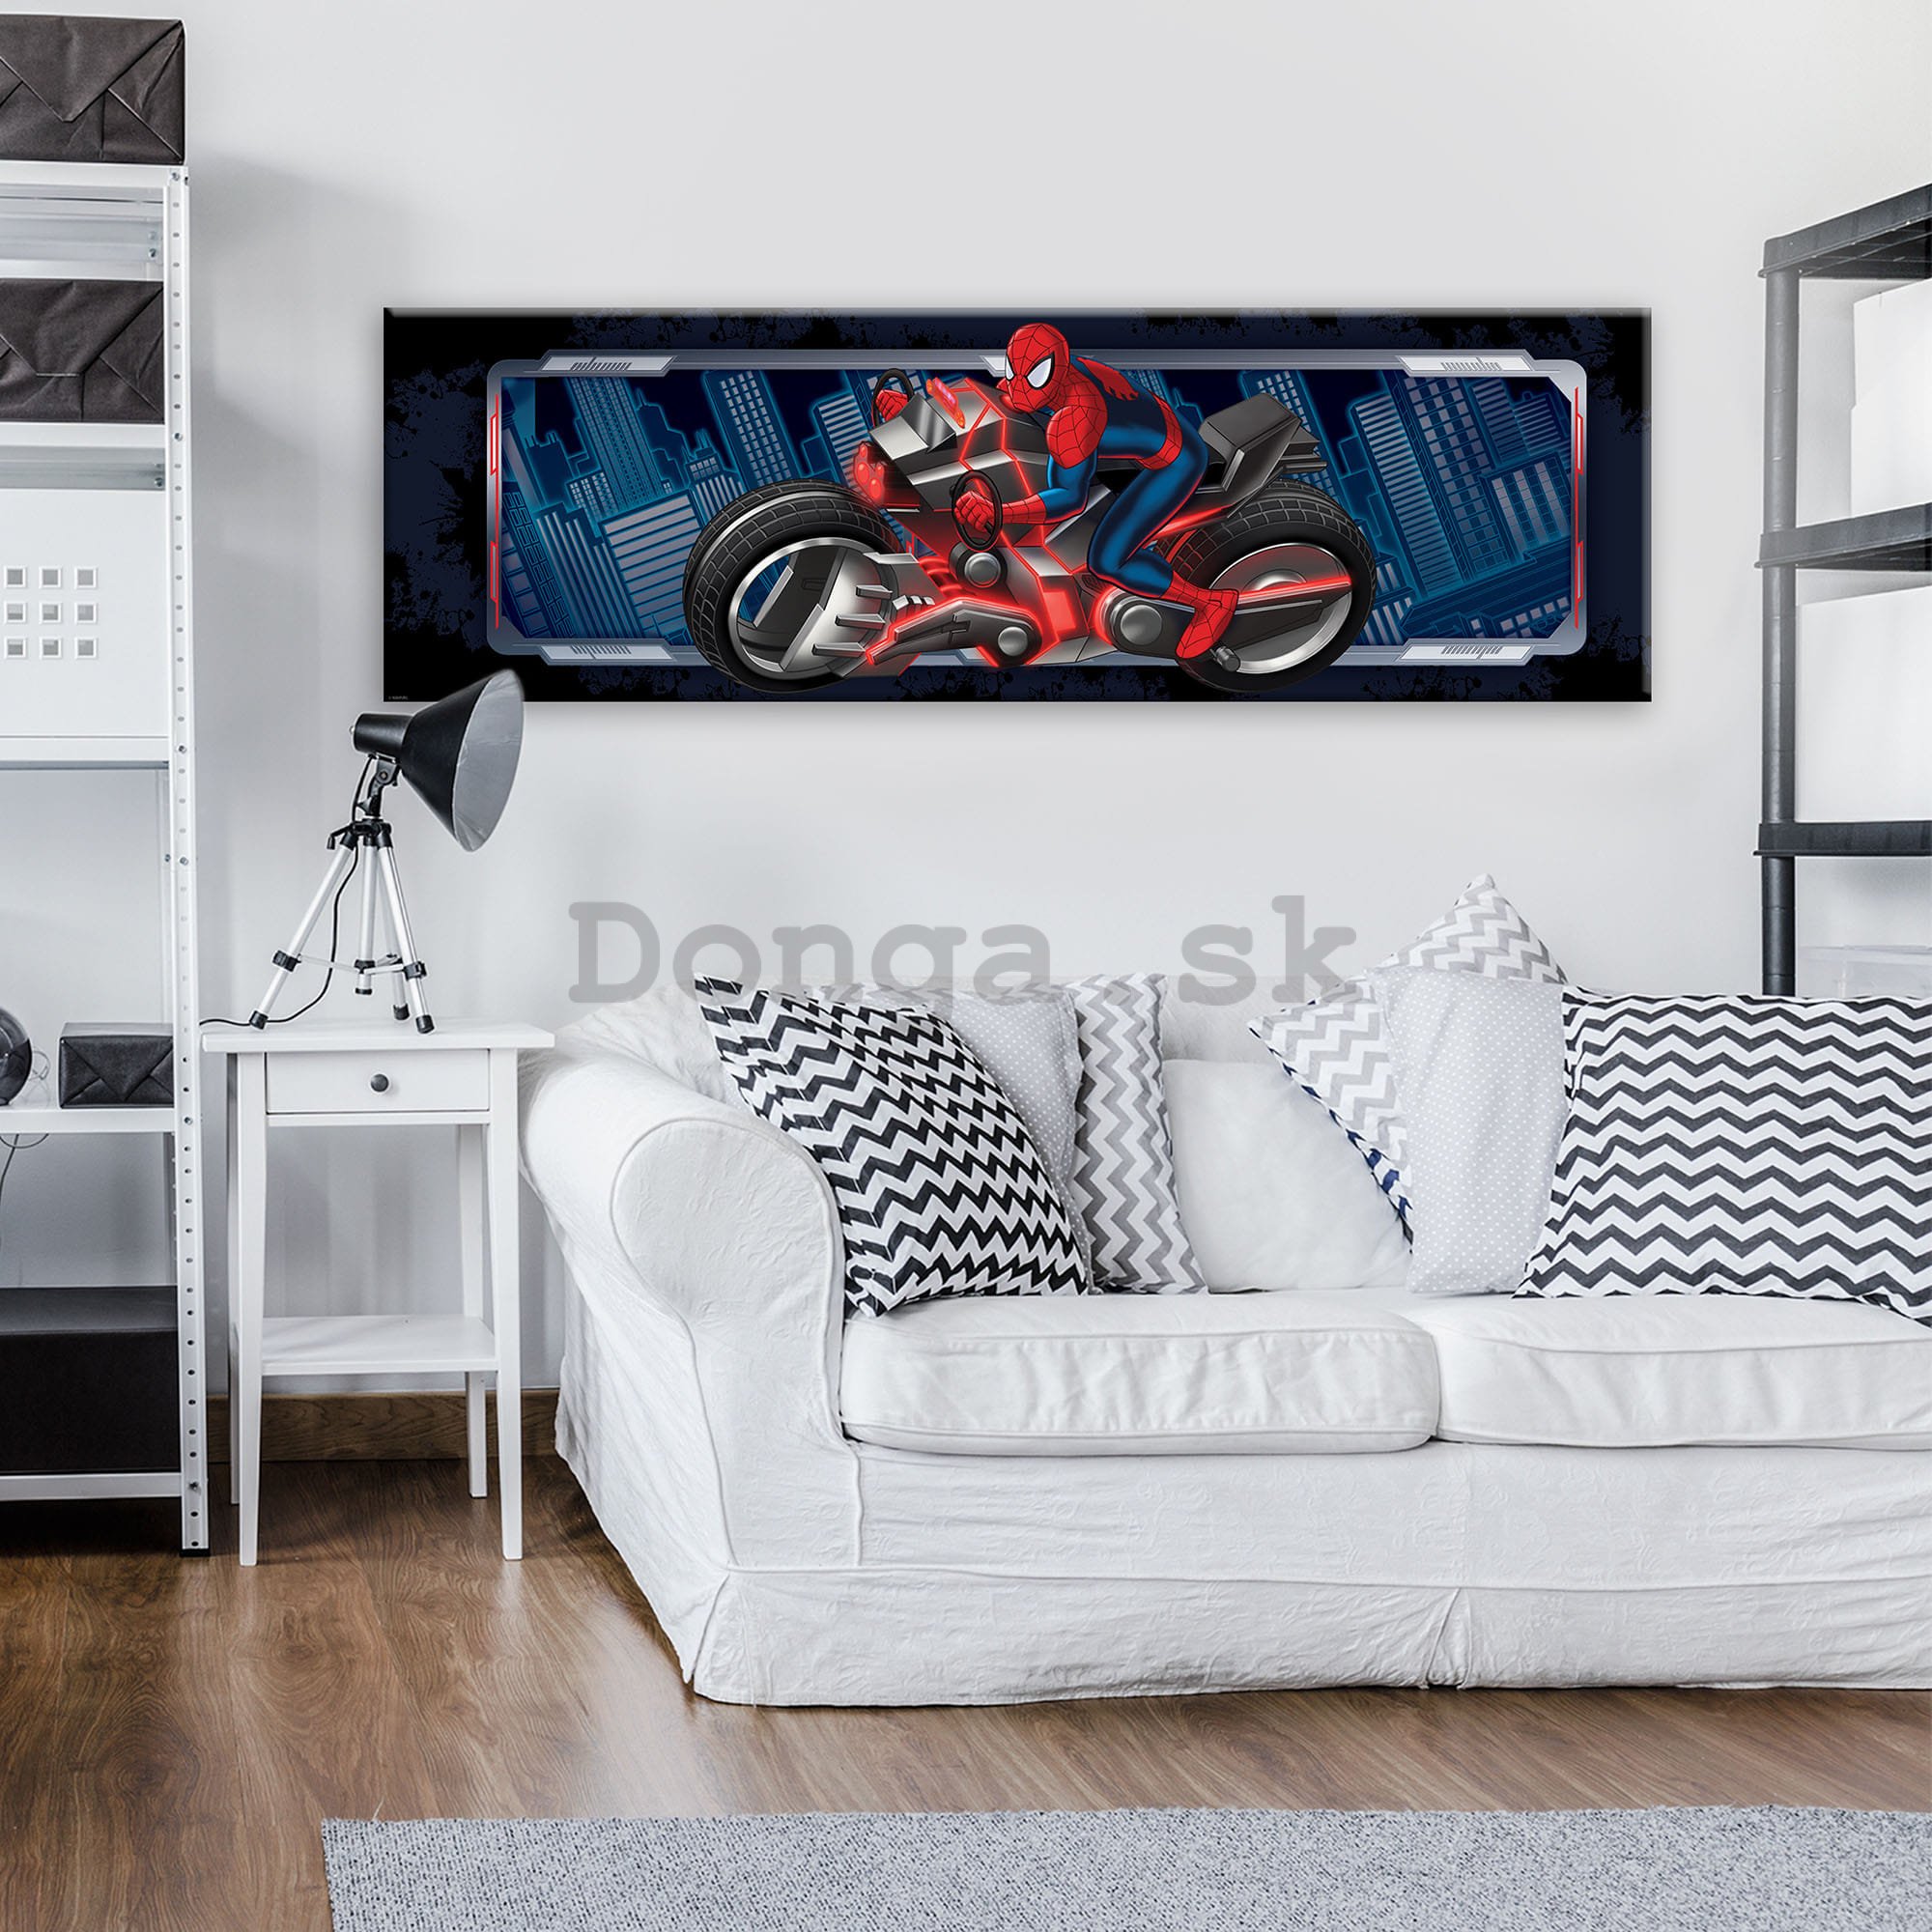 Obraz na plátne: Spiderman a Motorka - 145x45 cm